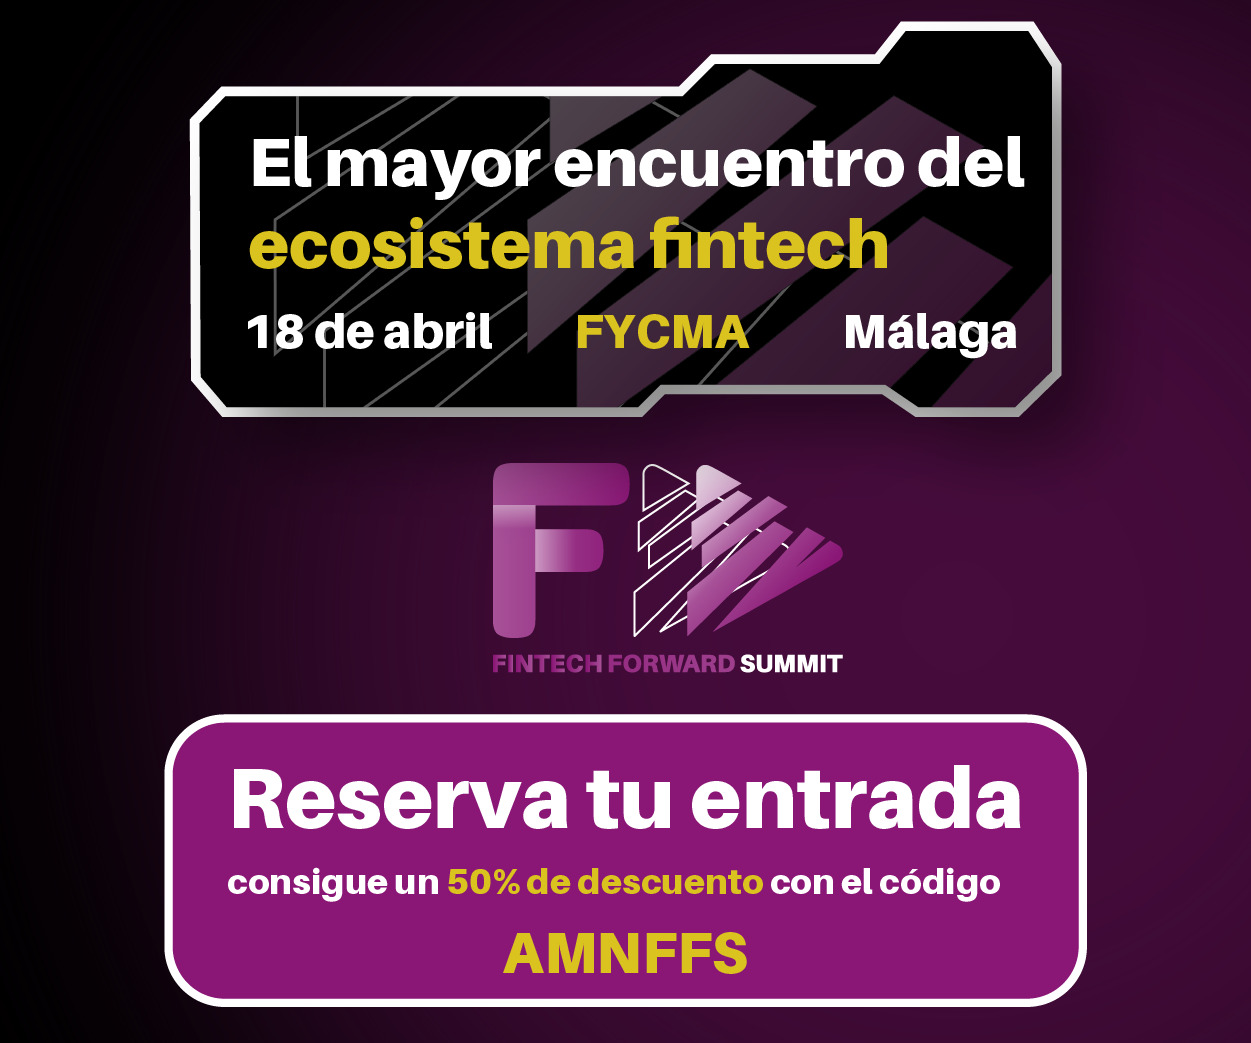 Fintech forward summit